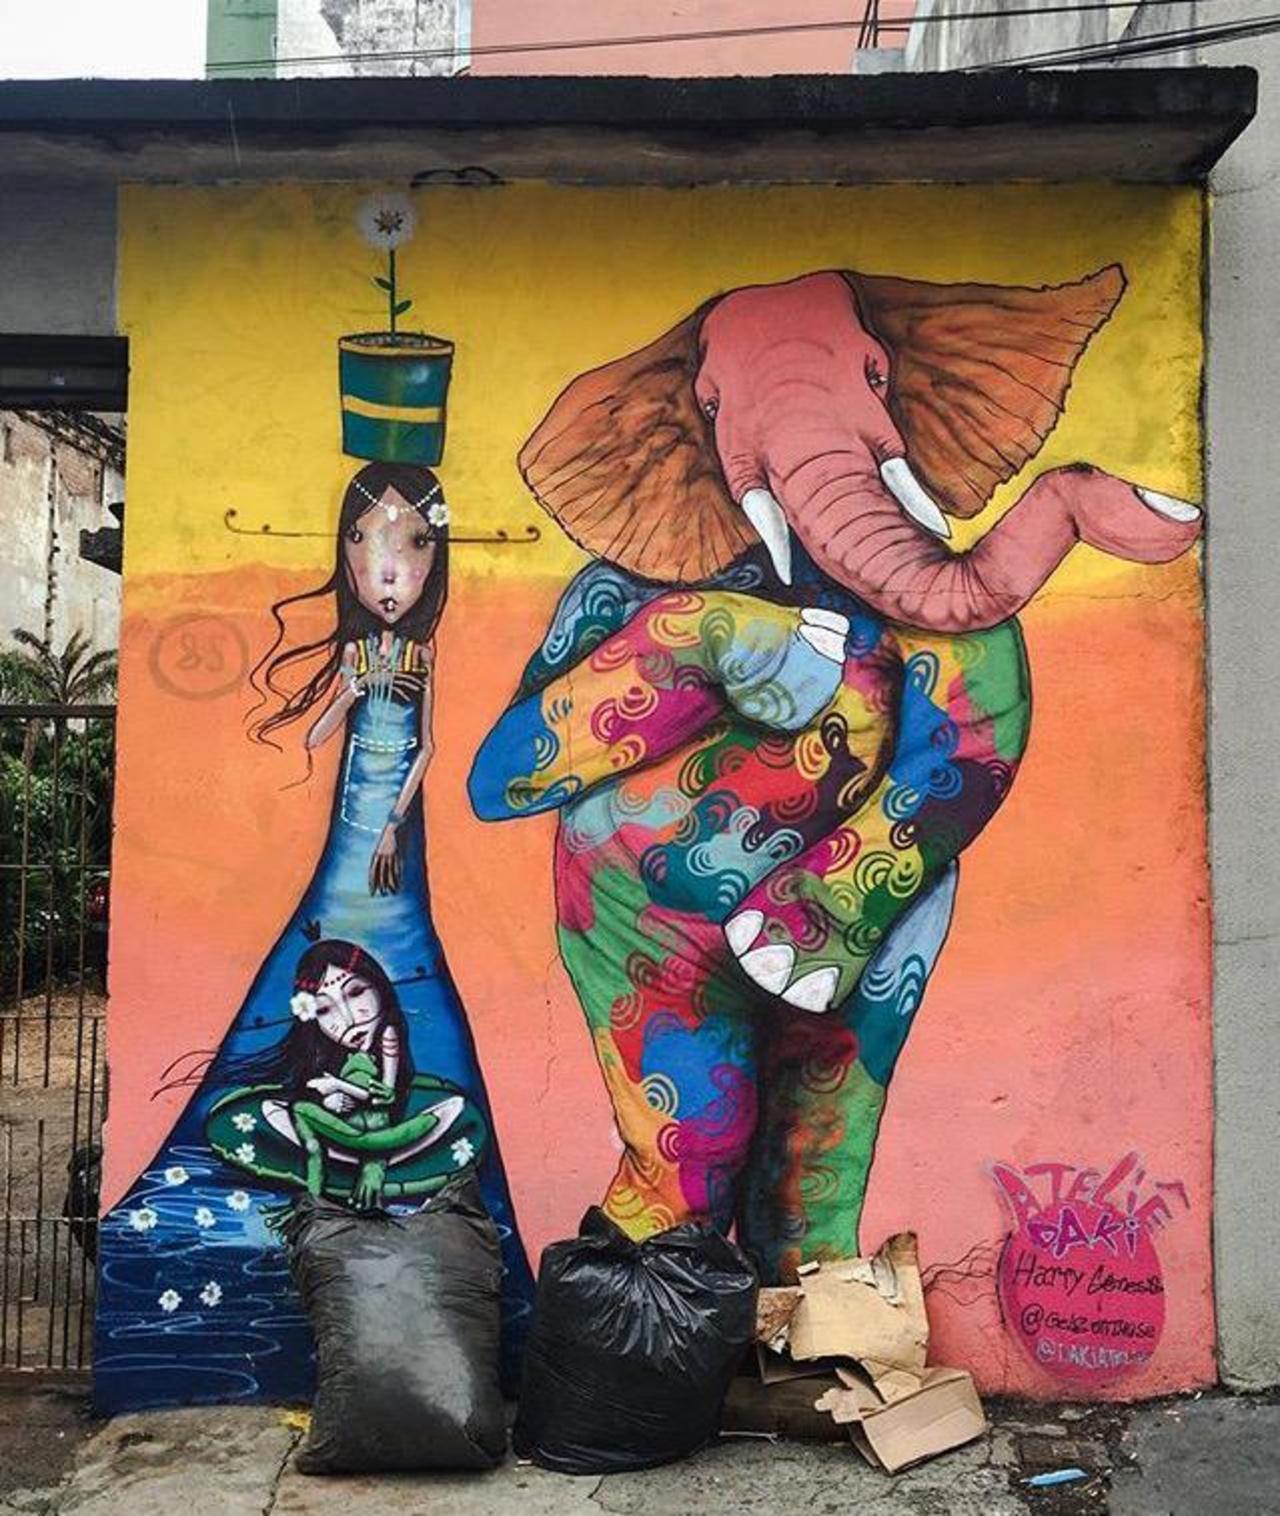 Street Art by Harry Geneis & Gelson in São Paulo #art #mural #graffiti #streetart http://t.co/SlLbhuMZfD … … http://twitter.com/charlesjackso14/status/648017879745568768